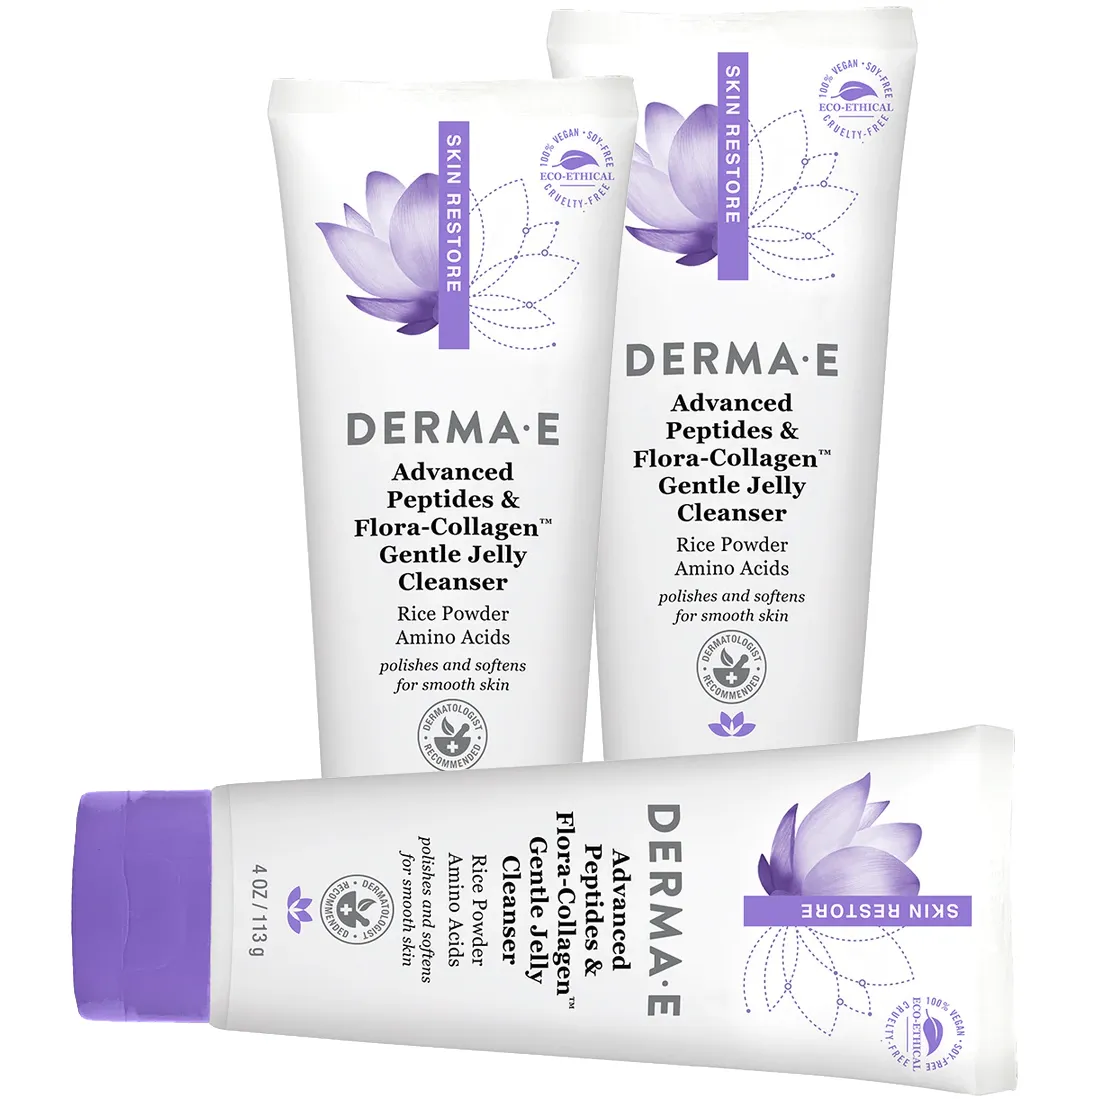 Free DERMA E Skin Restore Line Samples